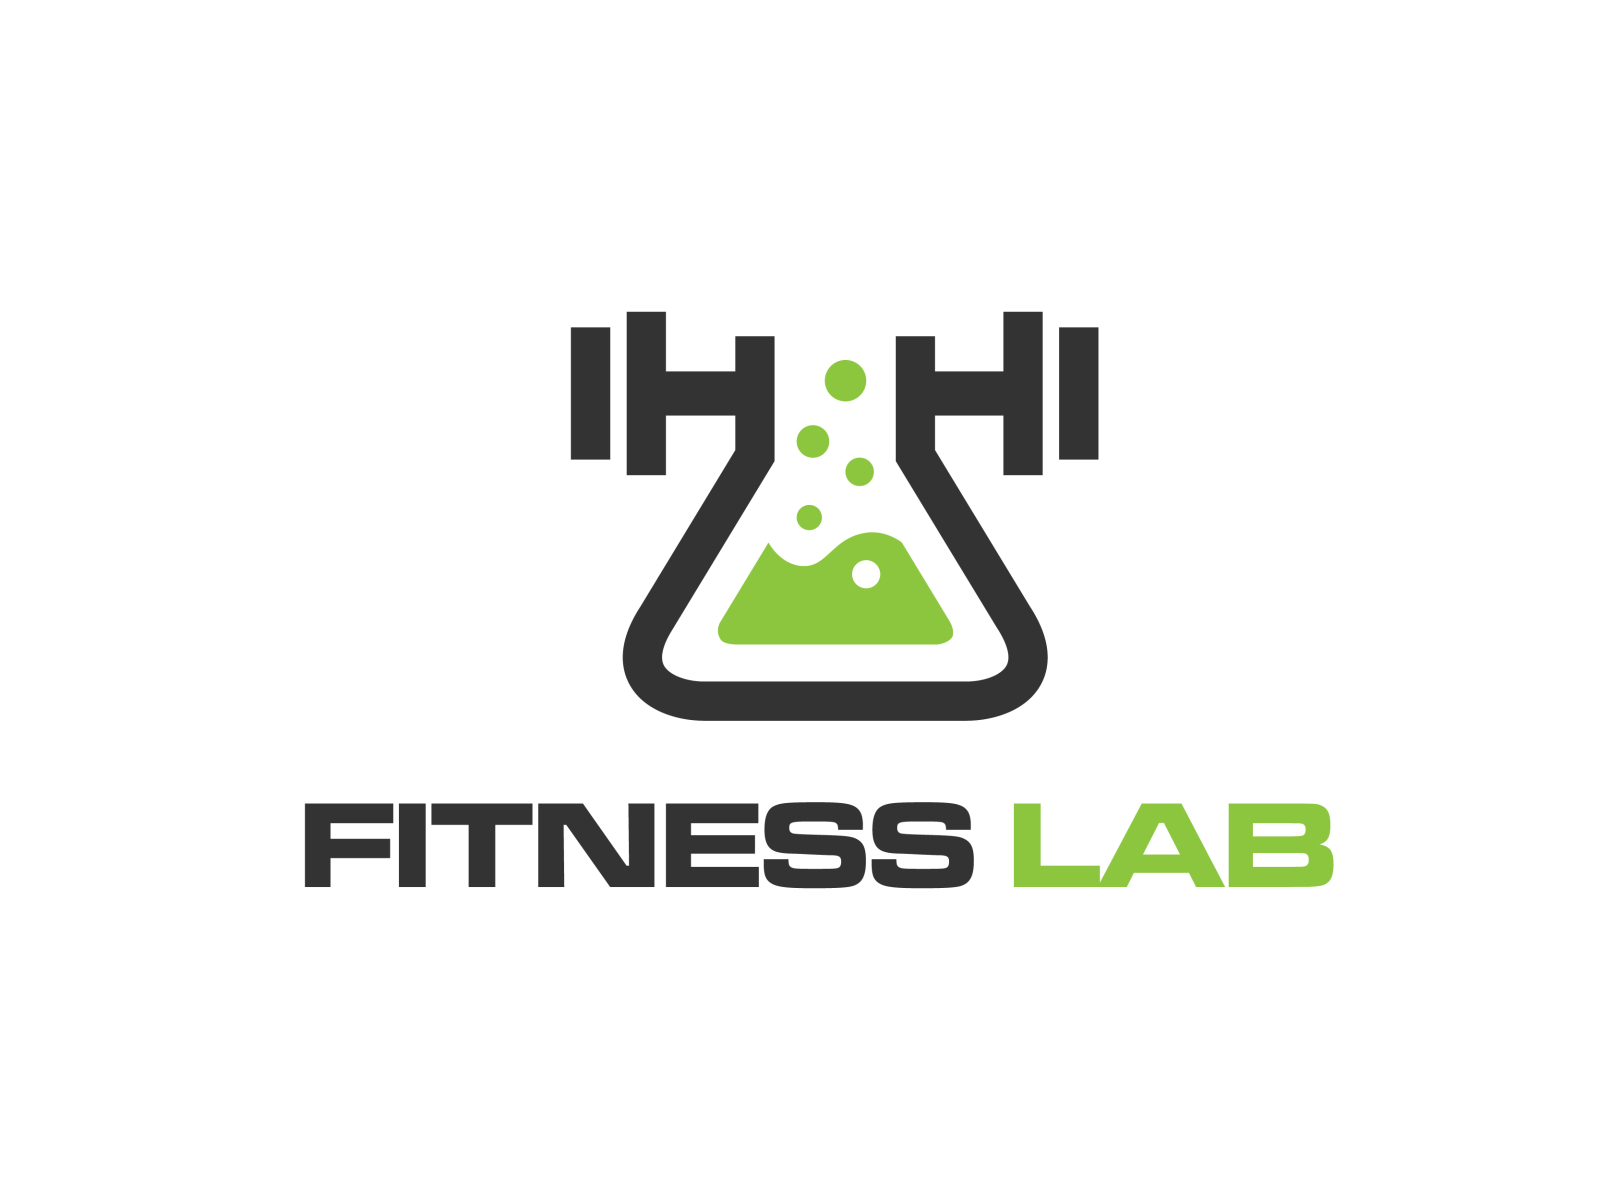 Fitness Lab Logo by Pino Studio on Dribbble